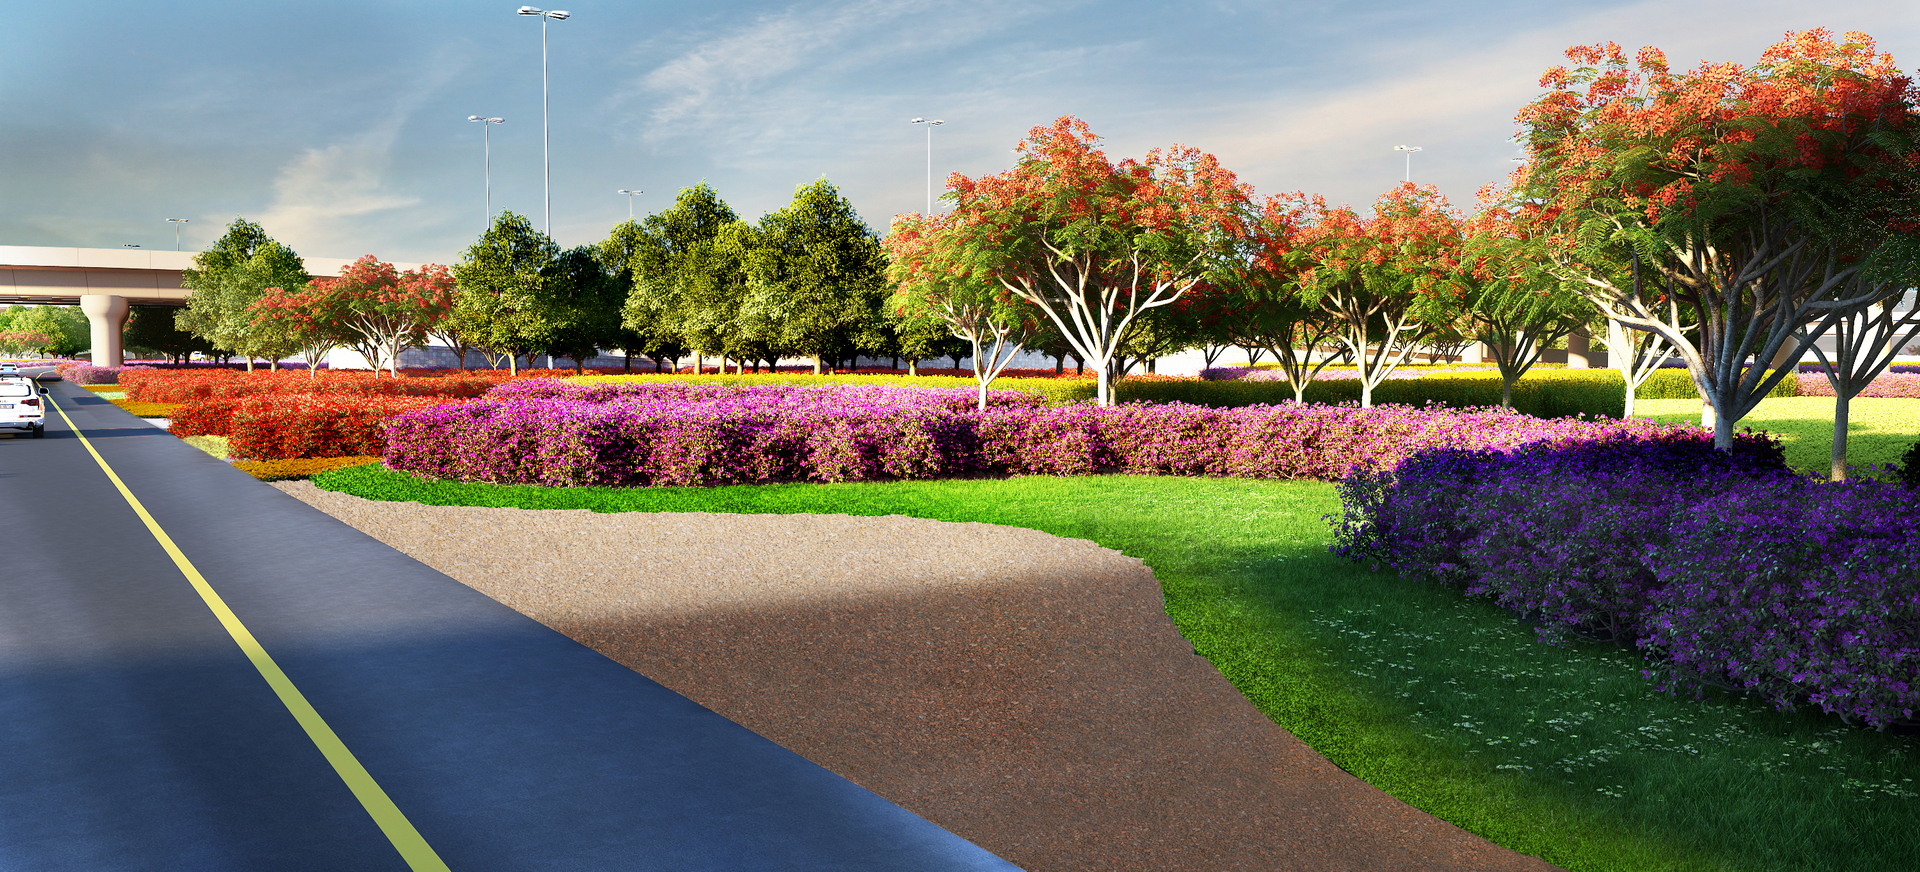 <p>The landscaping project spans 16 kilometres along roads linking to Dubai. </p>